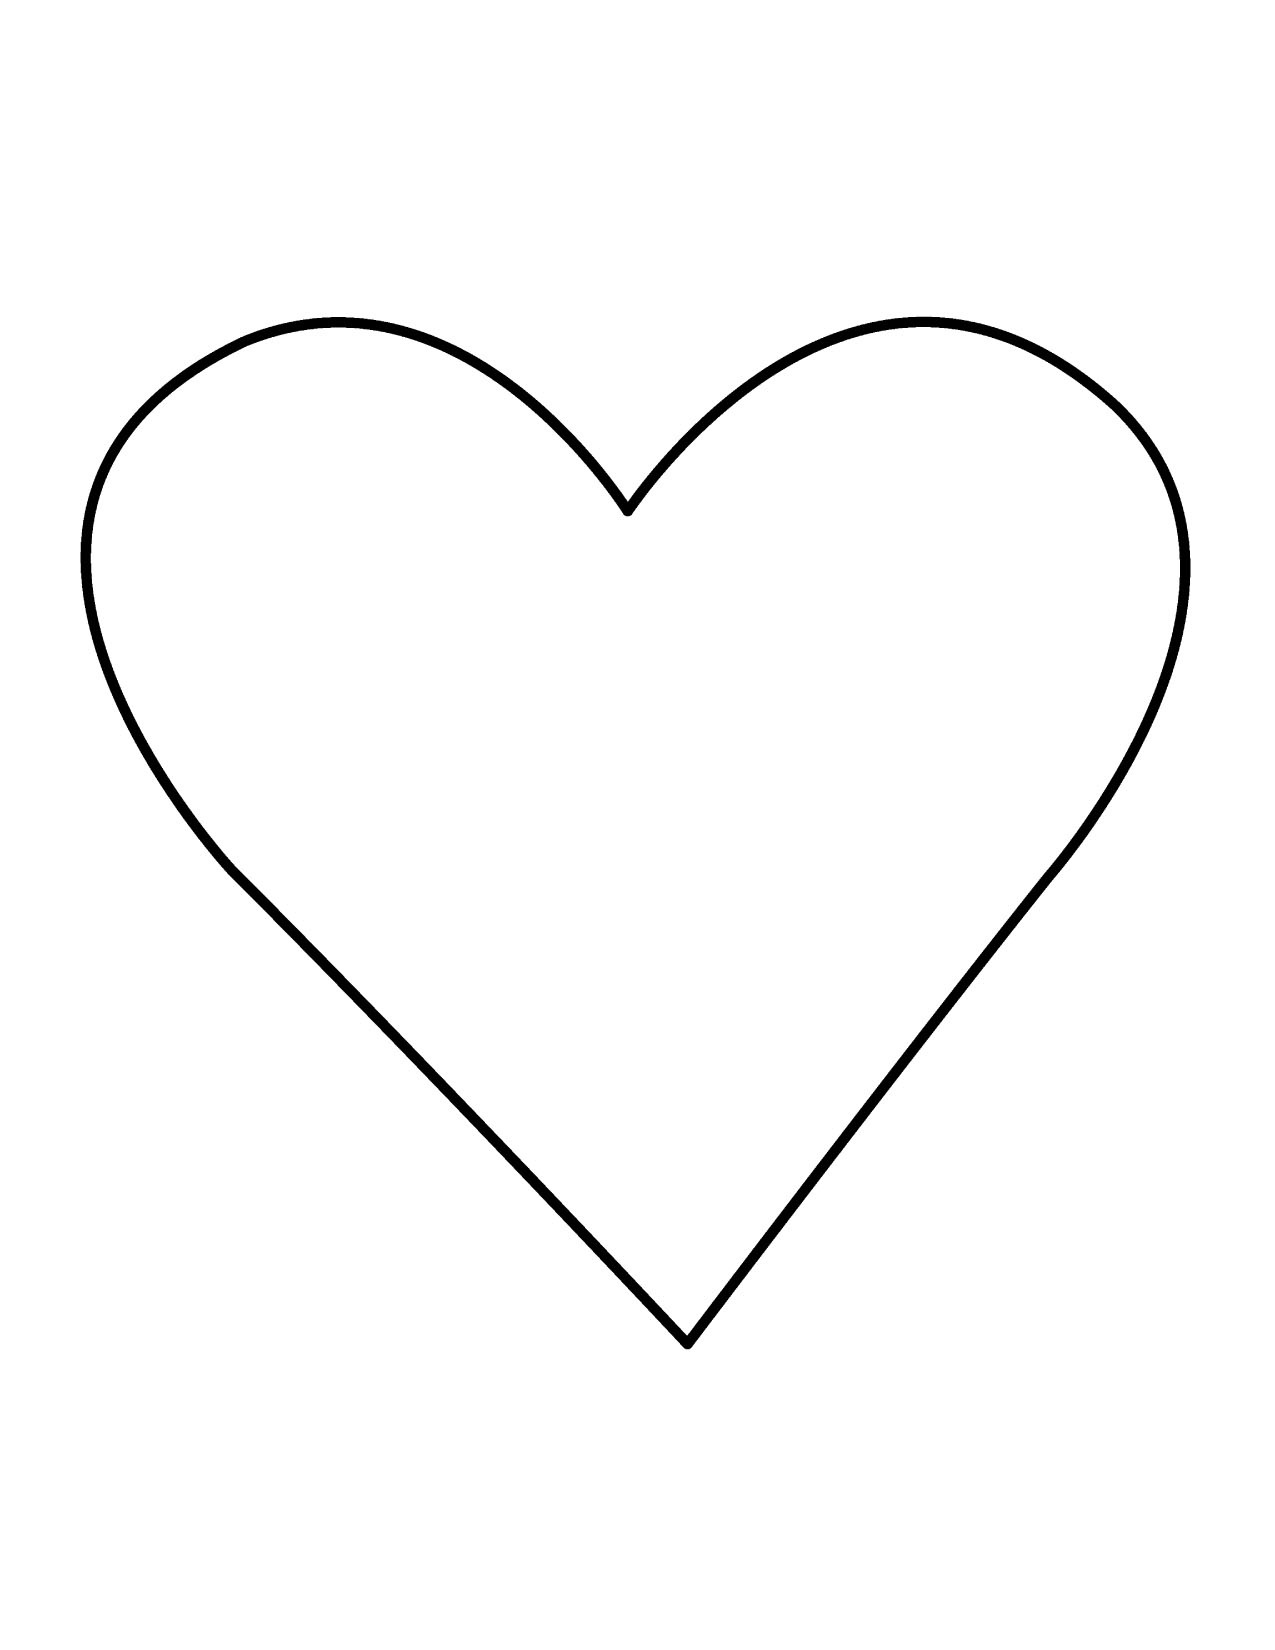 Clip Art Of A Heart Cliparts.co